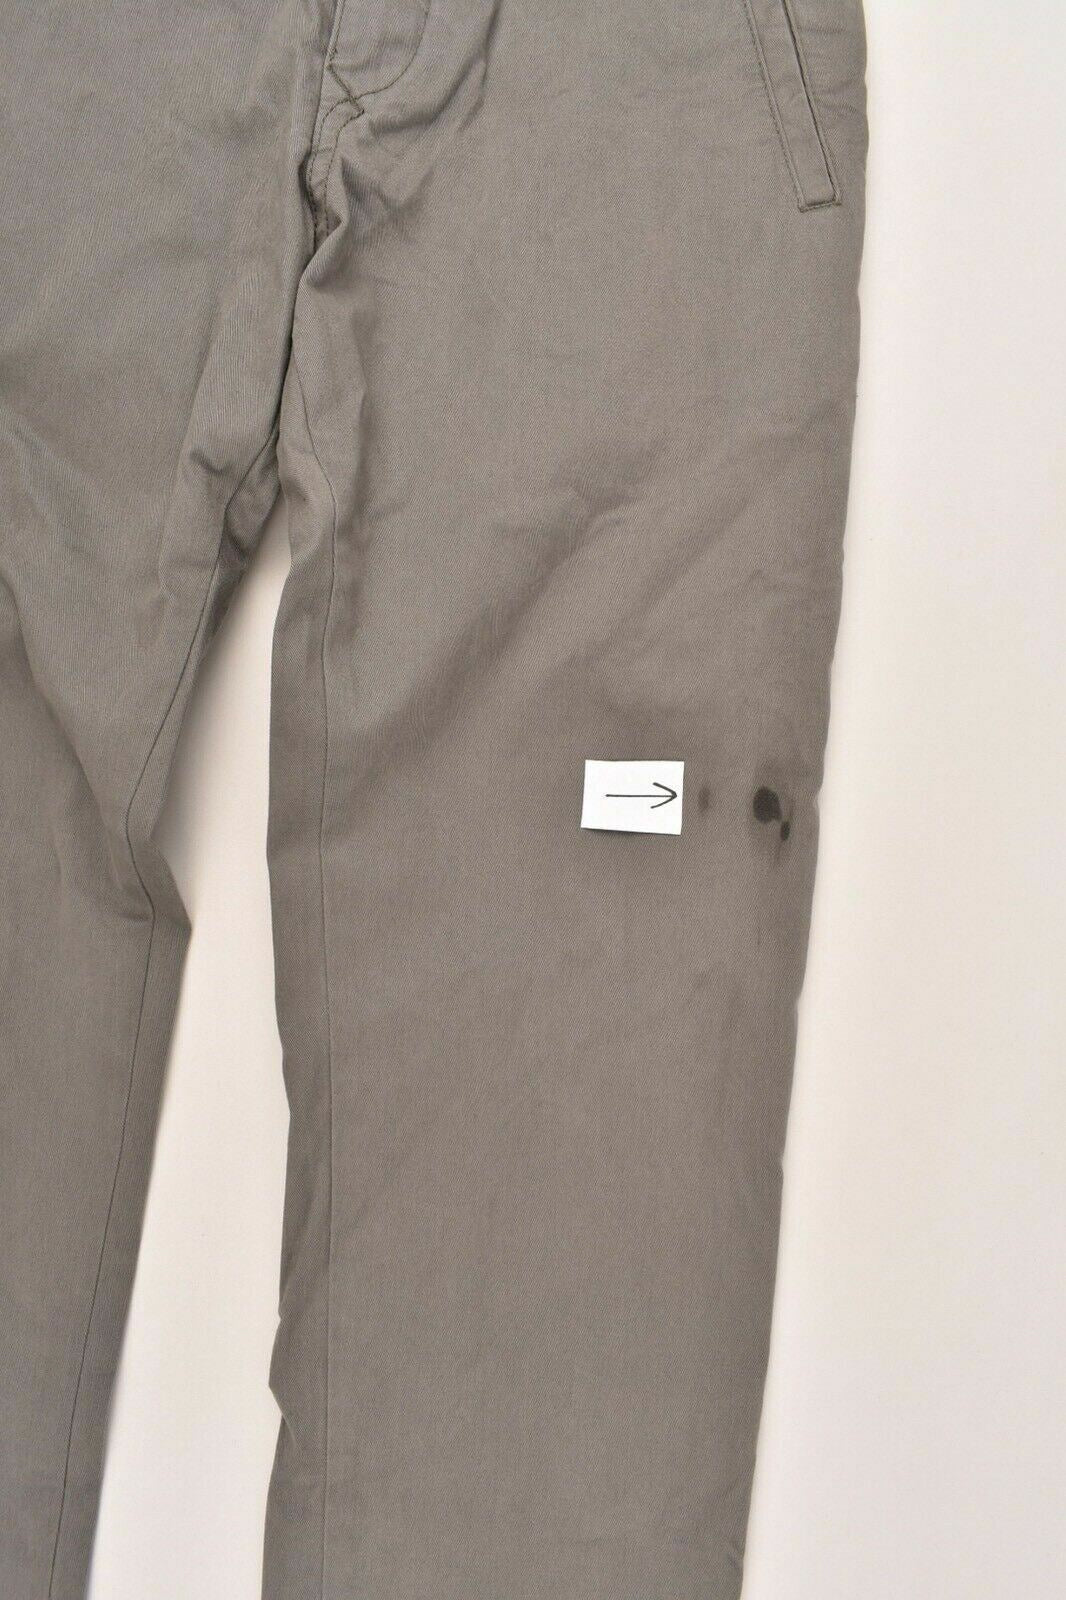 TOMMY HILFIGER Men's Slim Fit Chinos / Trousers /Pants, Artichoke, size W28 L34